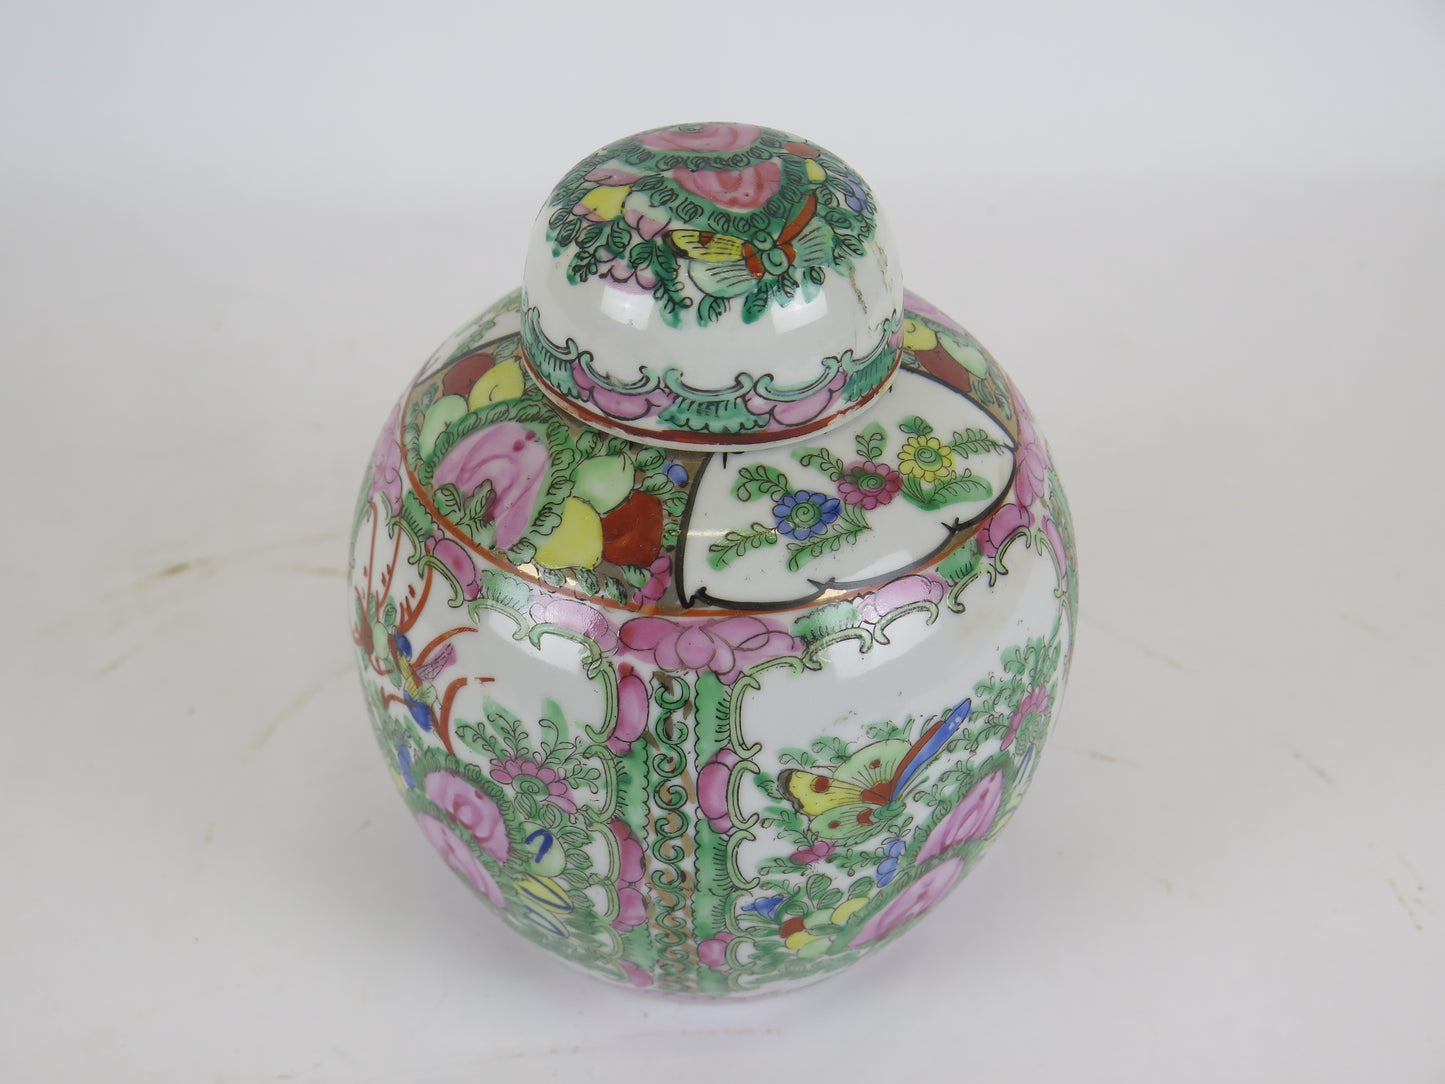 Old Chinese porcelain vase China vintage decorative hand painted bowl CM2